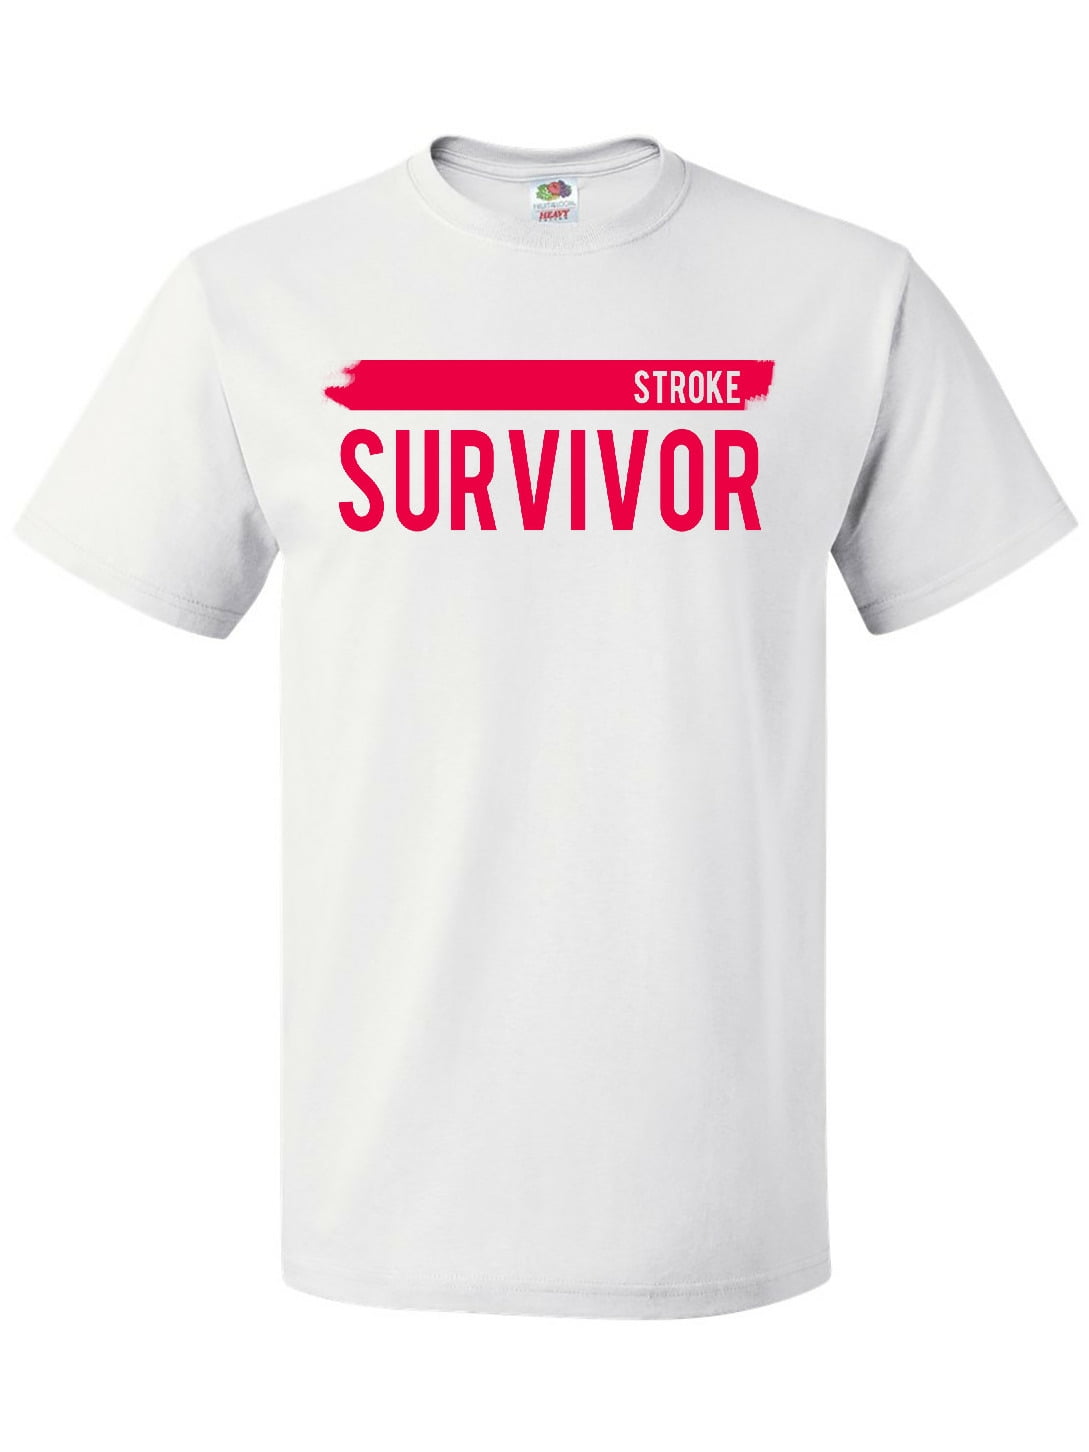 CafePress NOT Drunk Stroke Survivor Baseball Shirt 